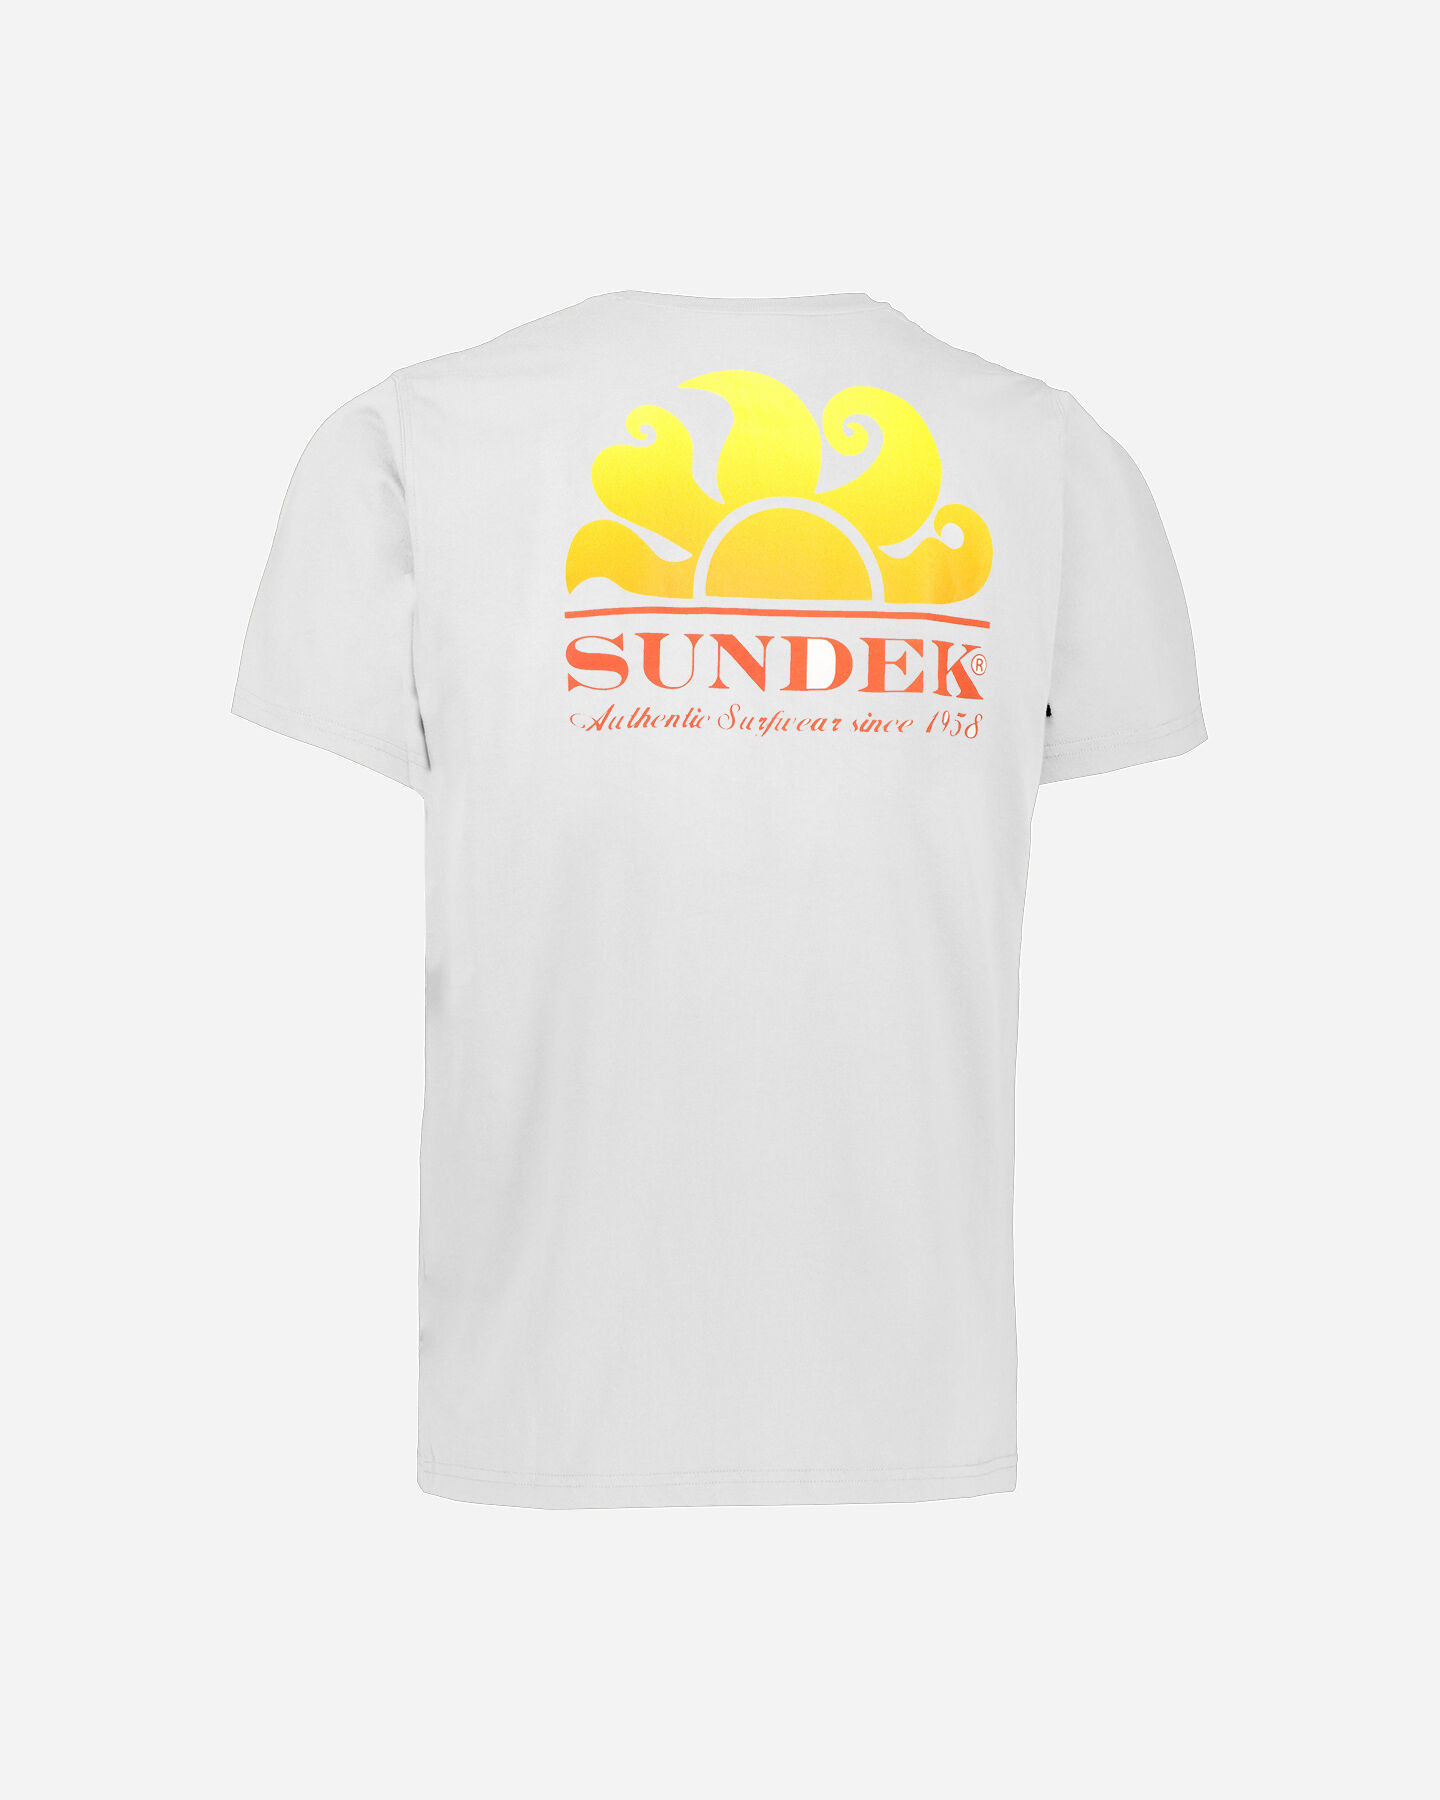  T-Shirt SUNDEK SUN M S4079618|006|S scatto 1